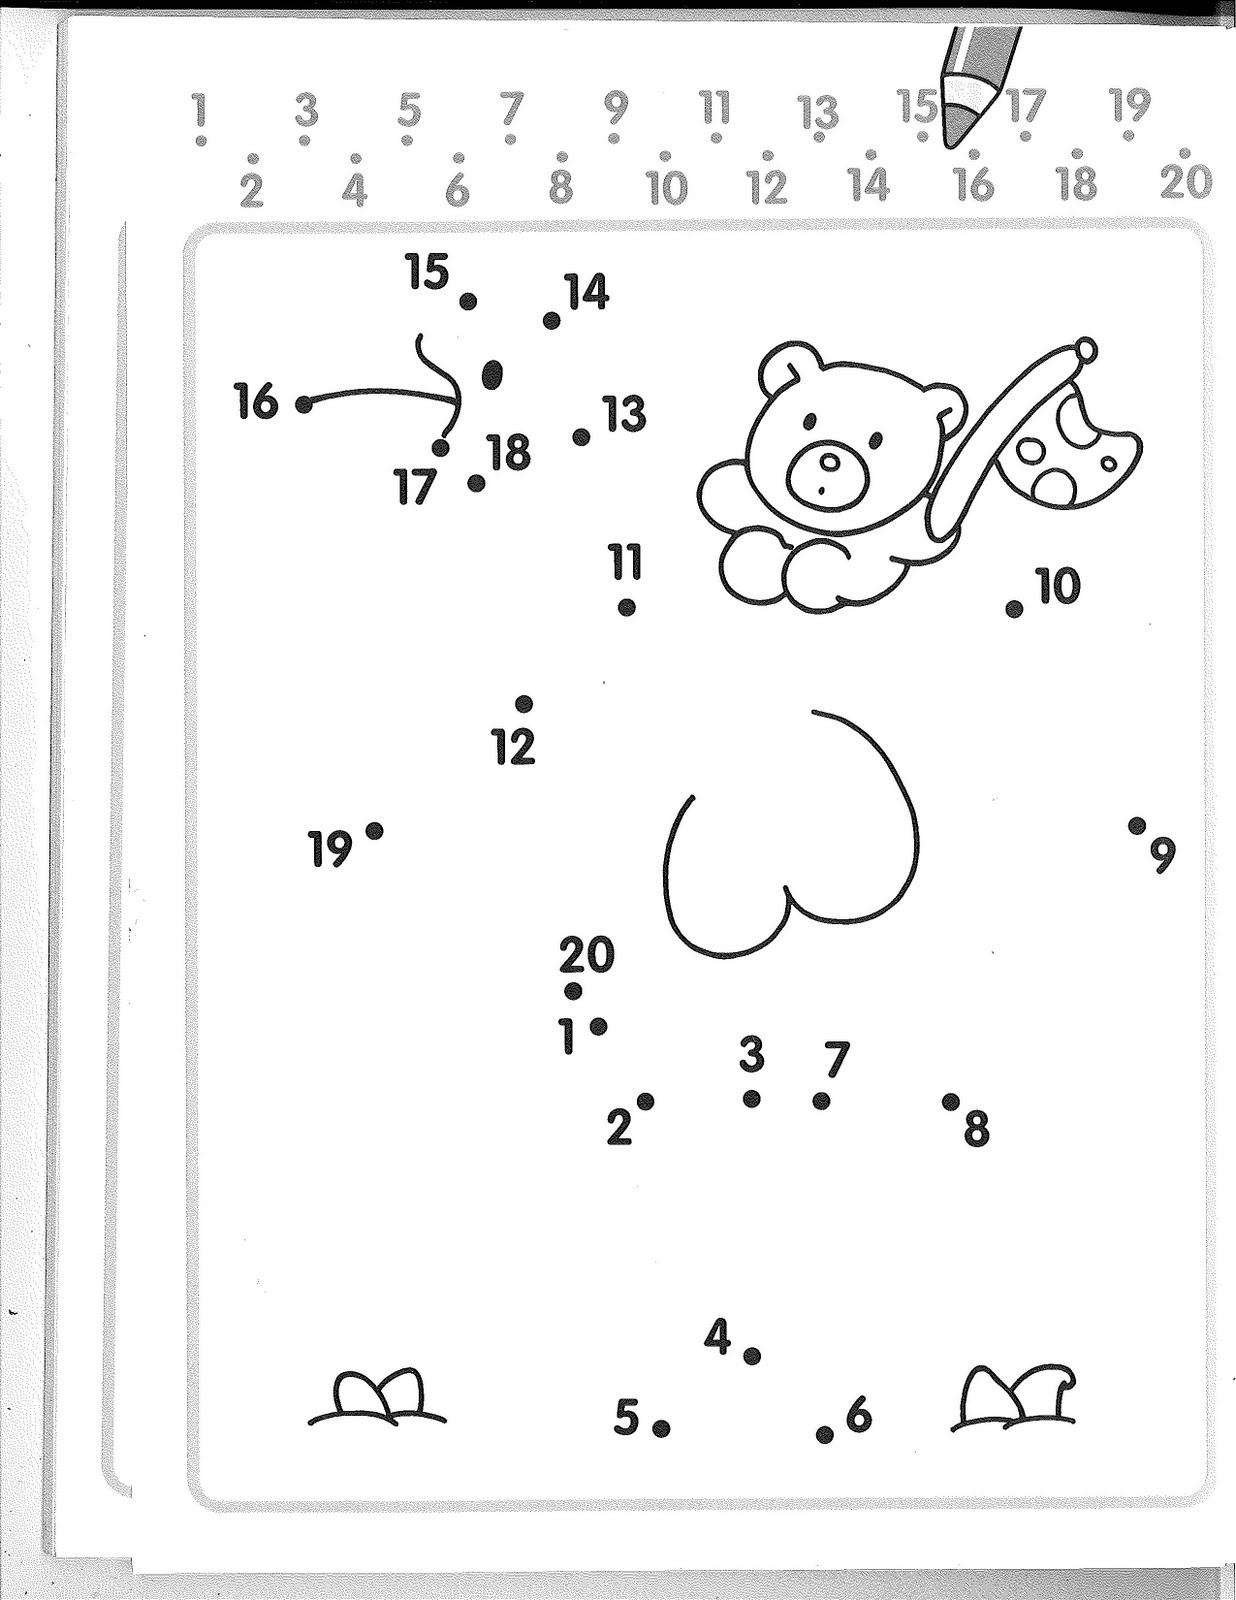 Numbers 1 20 Dot to dot Kindergarten Sequencing Worksheets 